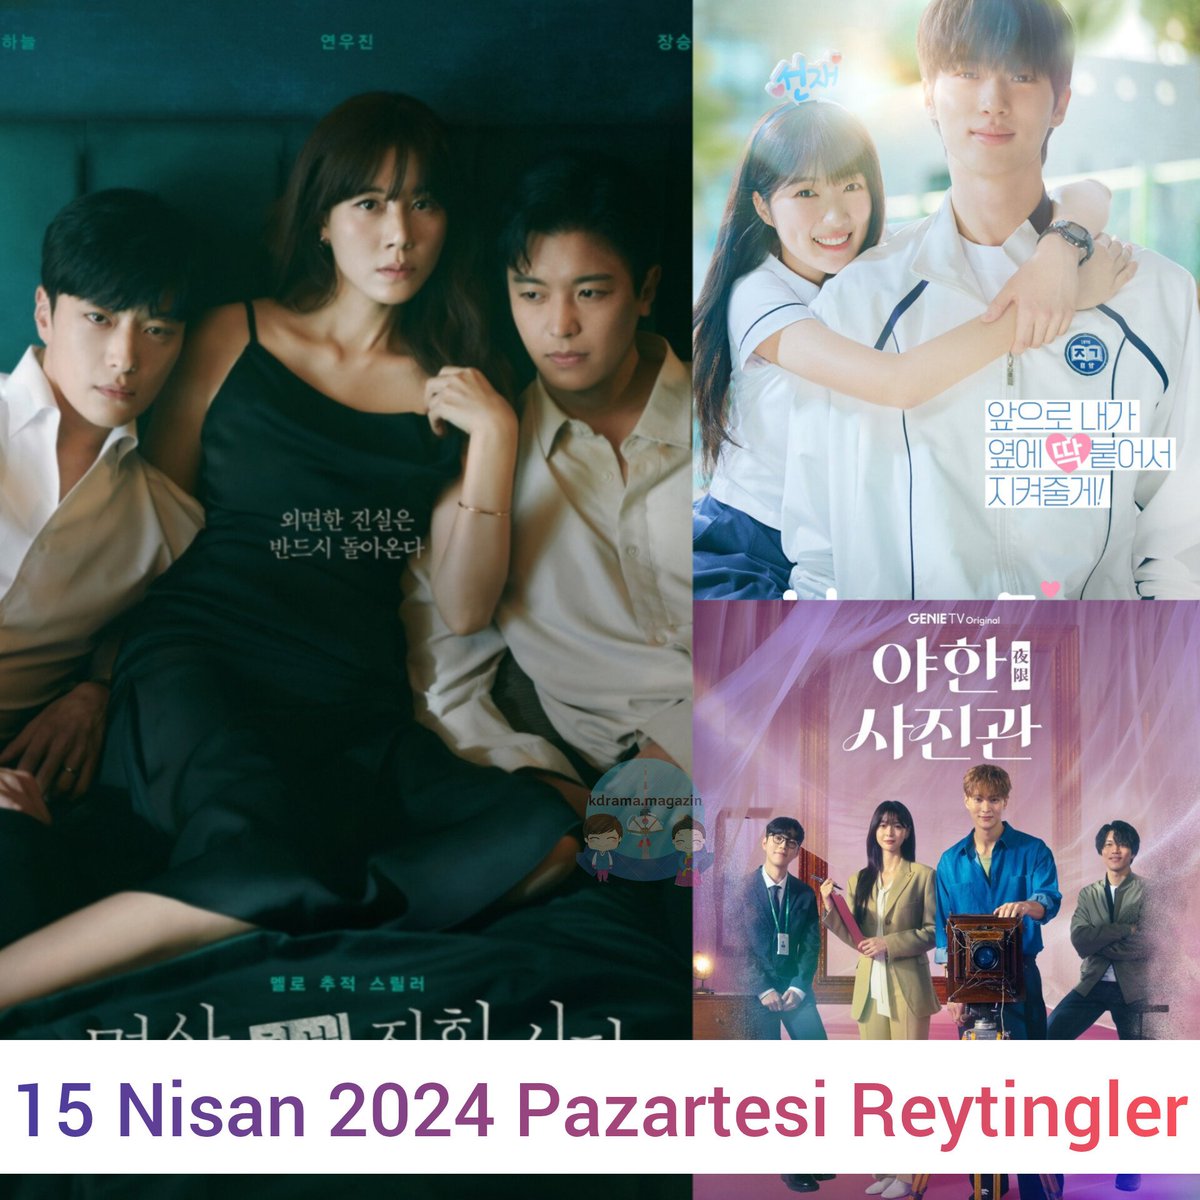 15 Nisan 2024 Pazartesi reytingler: KBS2 #NothingUncovered 2.3% tvN #LovelyRunner 3.4% ENA #TheMidnightStudio 2.1% 👉 #kdramamagazinreytingler